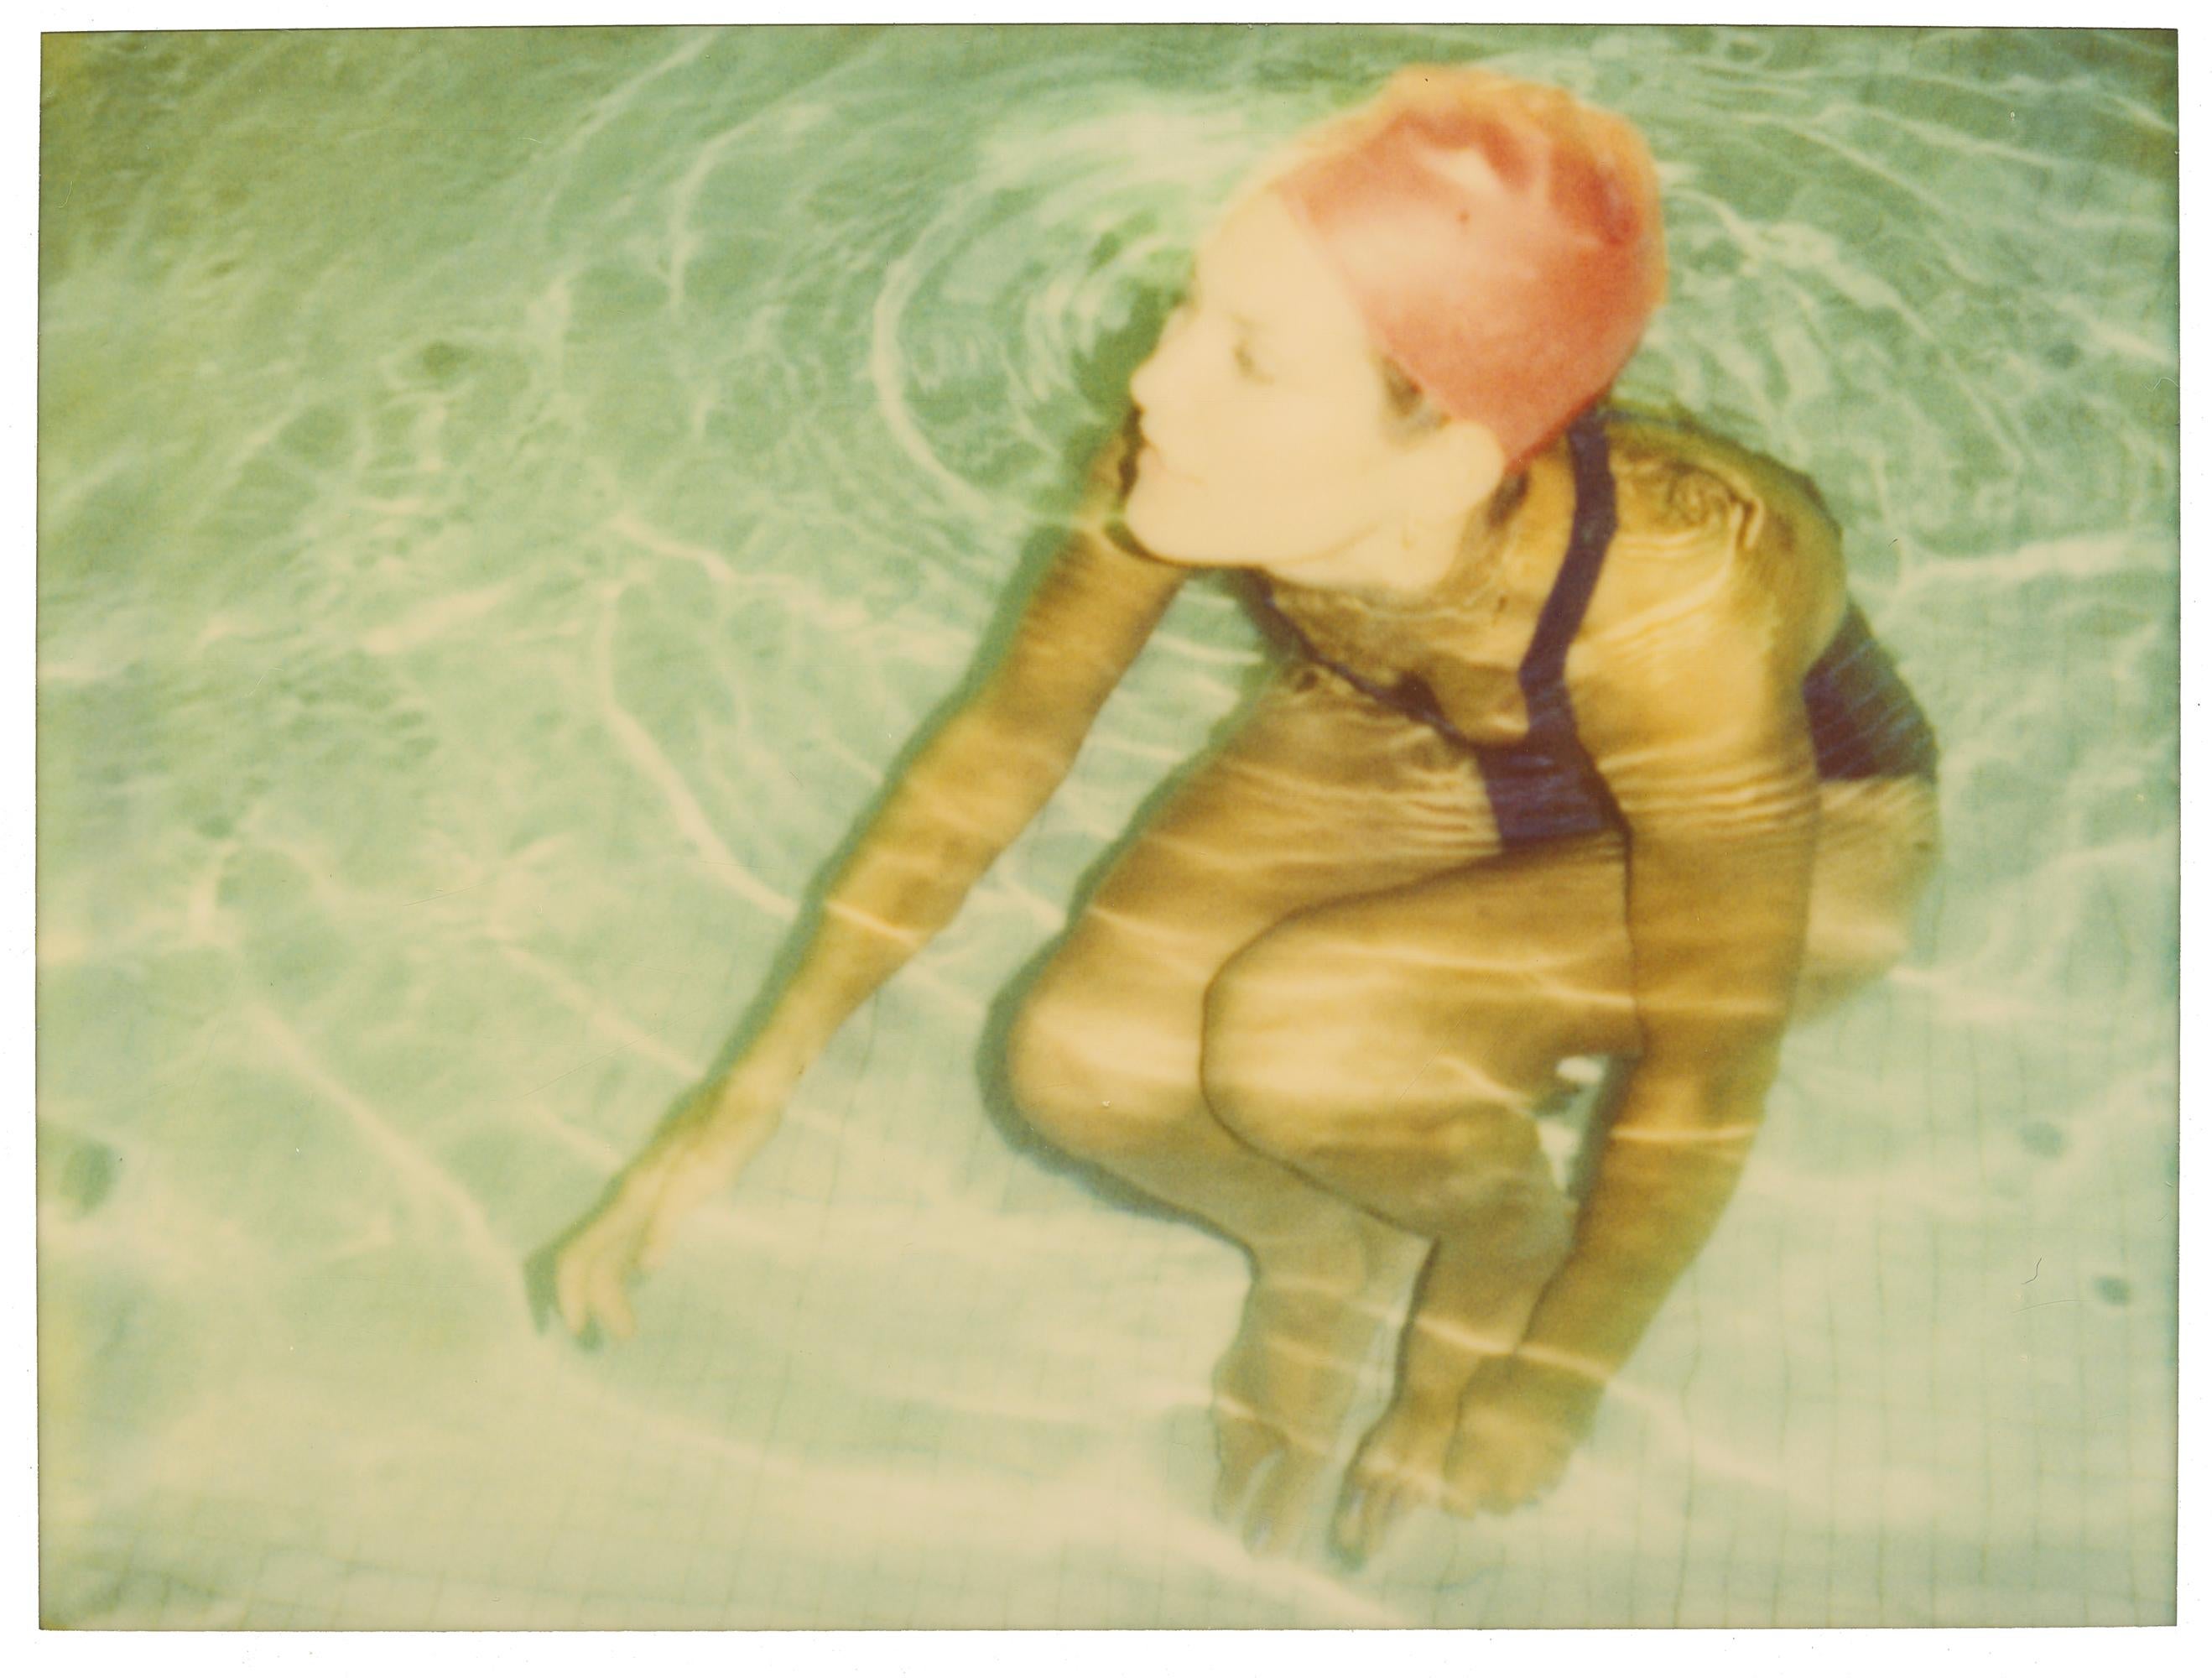 Stefanie Schneider Color Photograph - Pool Time (Suburbia) - Contemporary, Polaroid, Analog, Photography